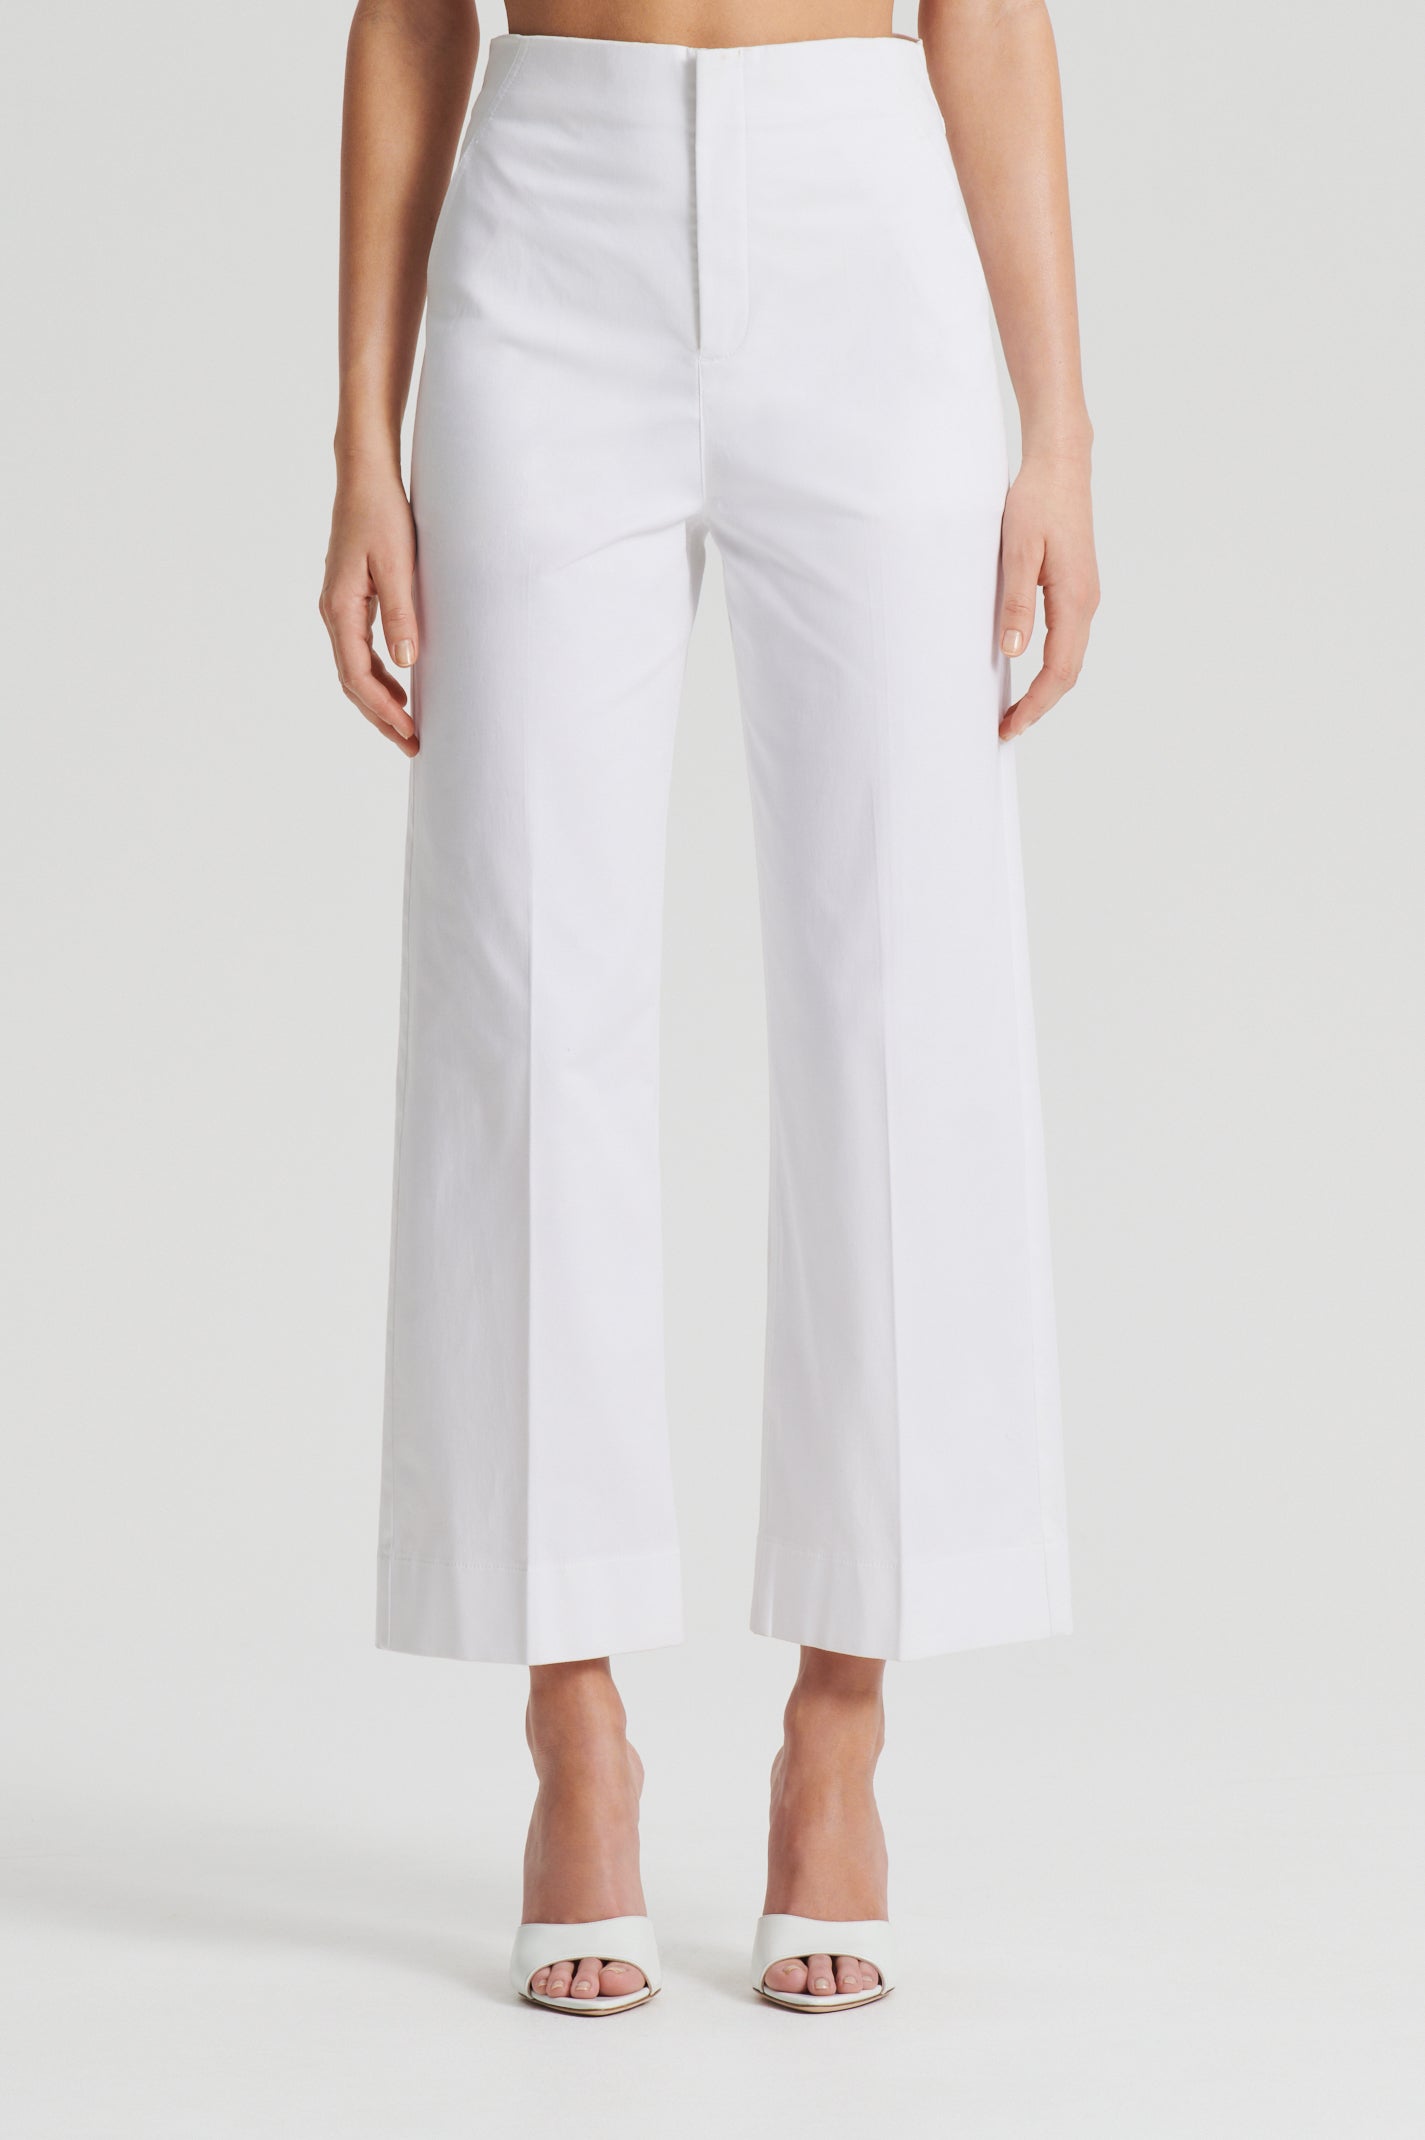 Buy White Trousers Online | Next UK